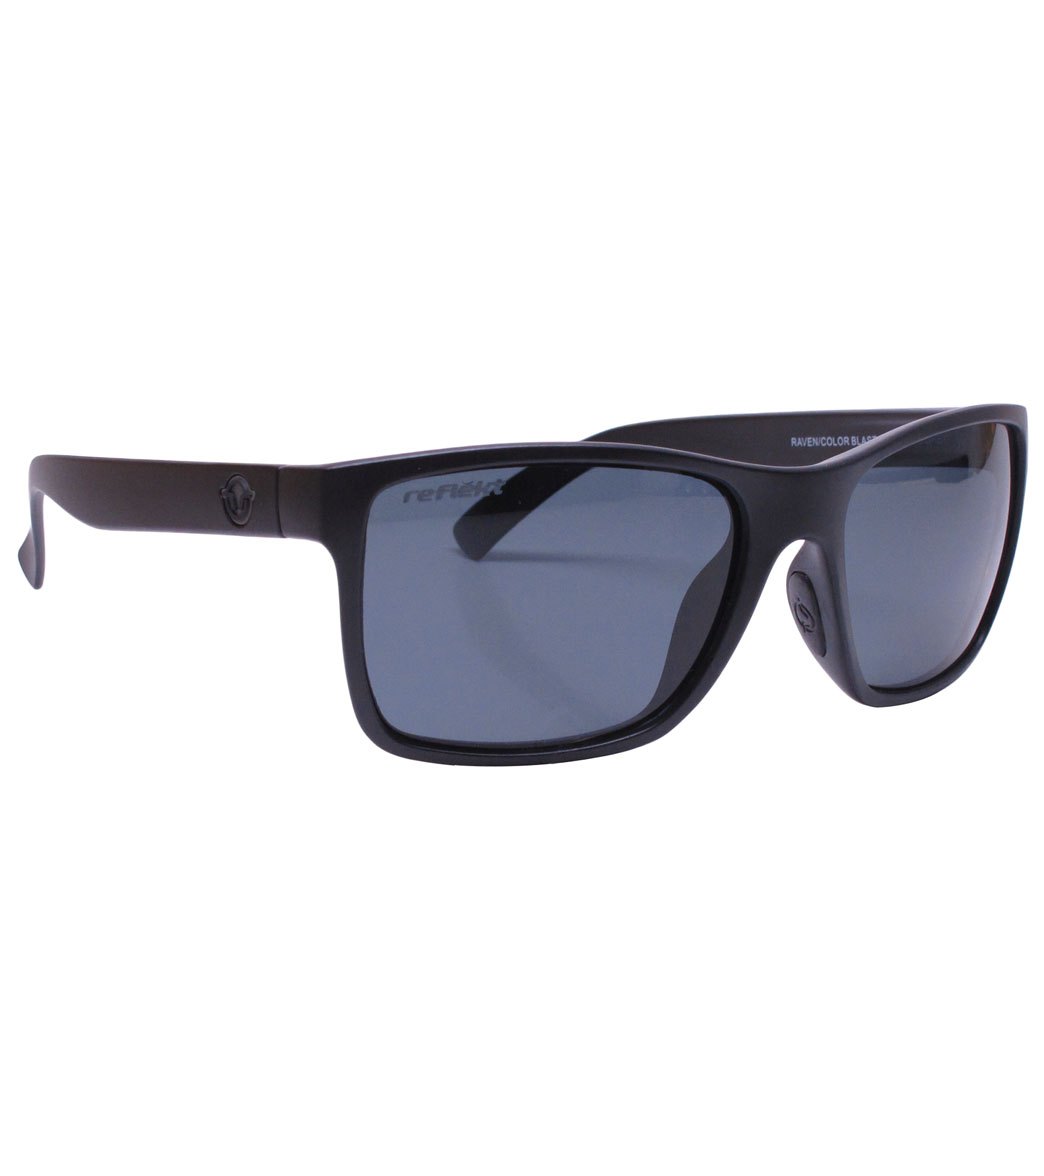 Unsinkable Polarized Mariner Floating Sunglasses - Raven/Grey - Swimoutlet.com